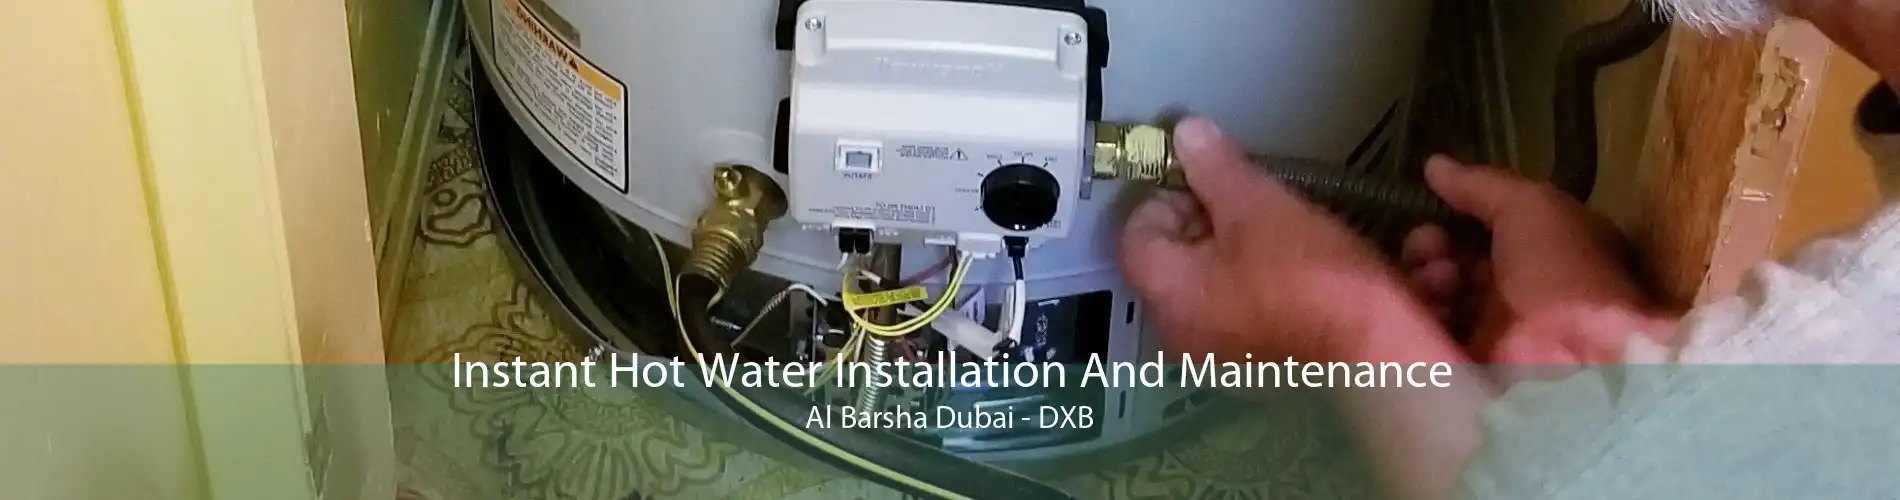 Instant Hot Water Installation And Maintenance Al Barsha Dubai - DXB